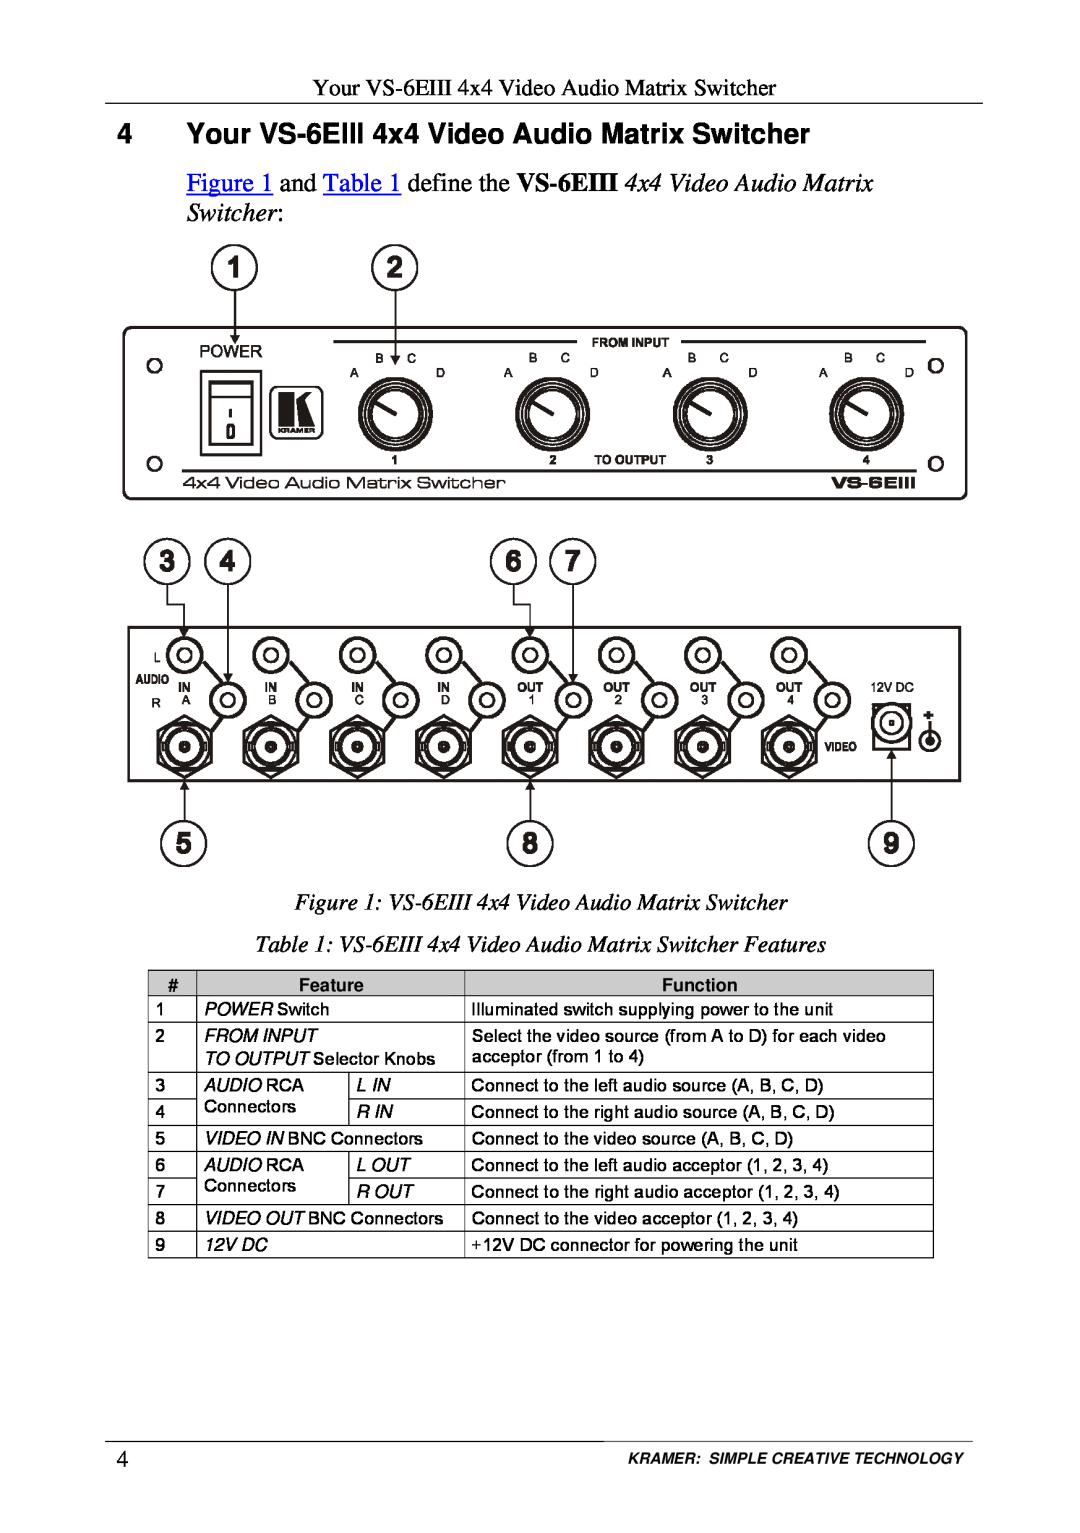 Kramer Electronics Your VS-6EIII 4x4 Video Audio Matrix Switcher, VS-6EIII 4x4 Video Audio Matrix Switcher Features 